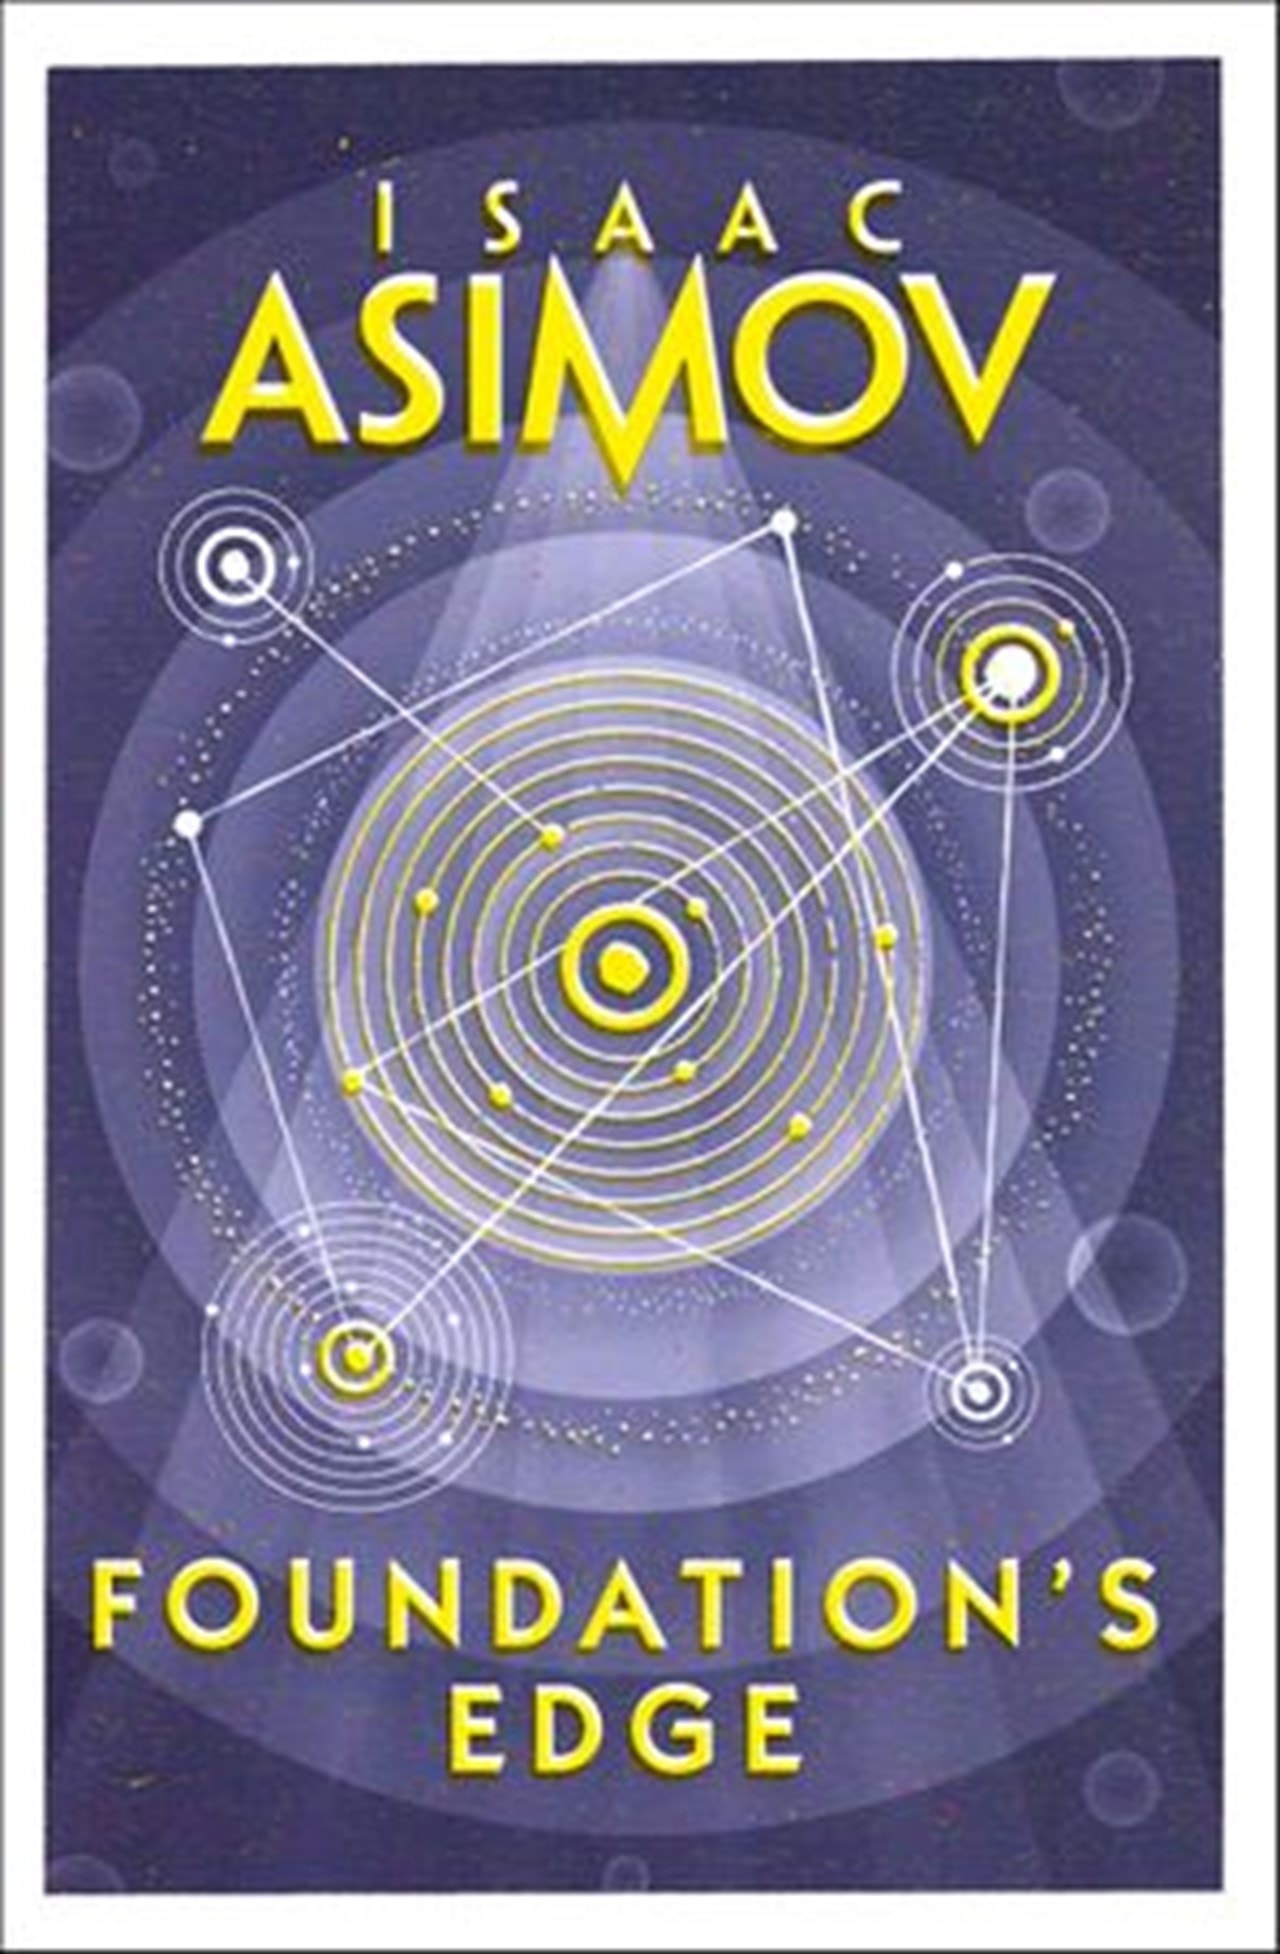 asimov foundation